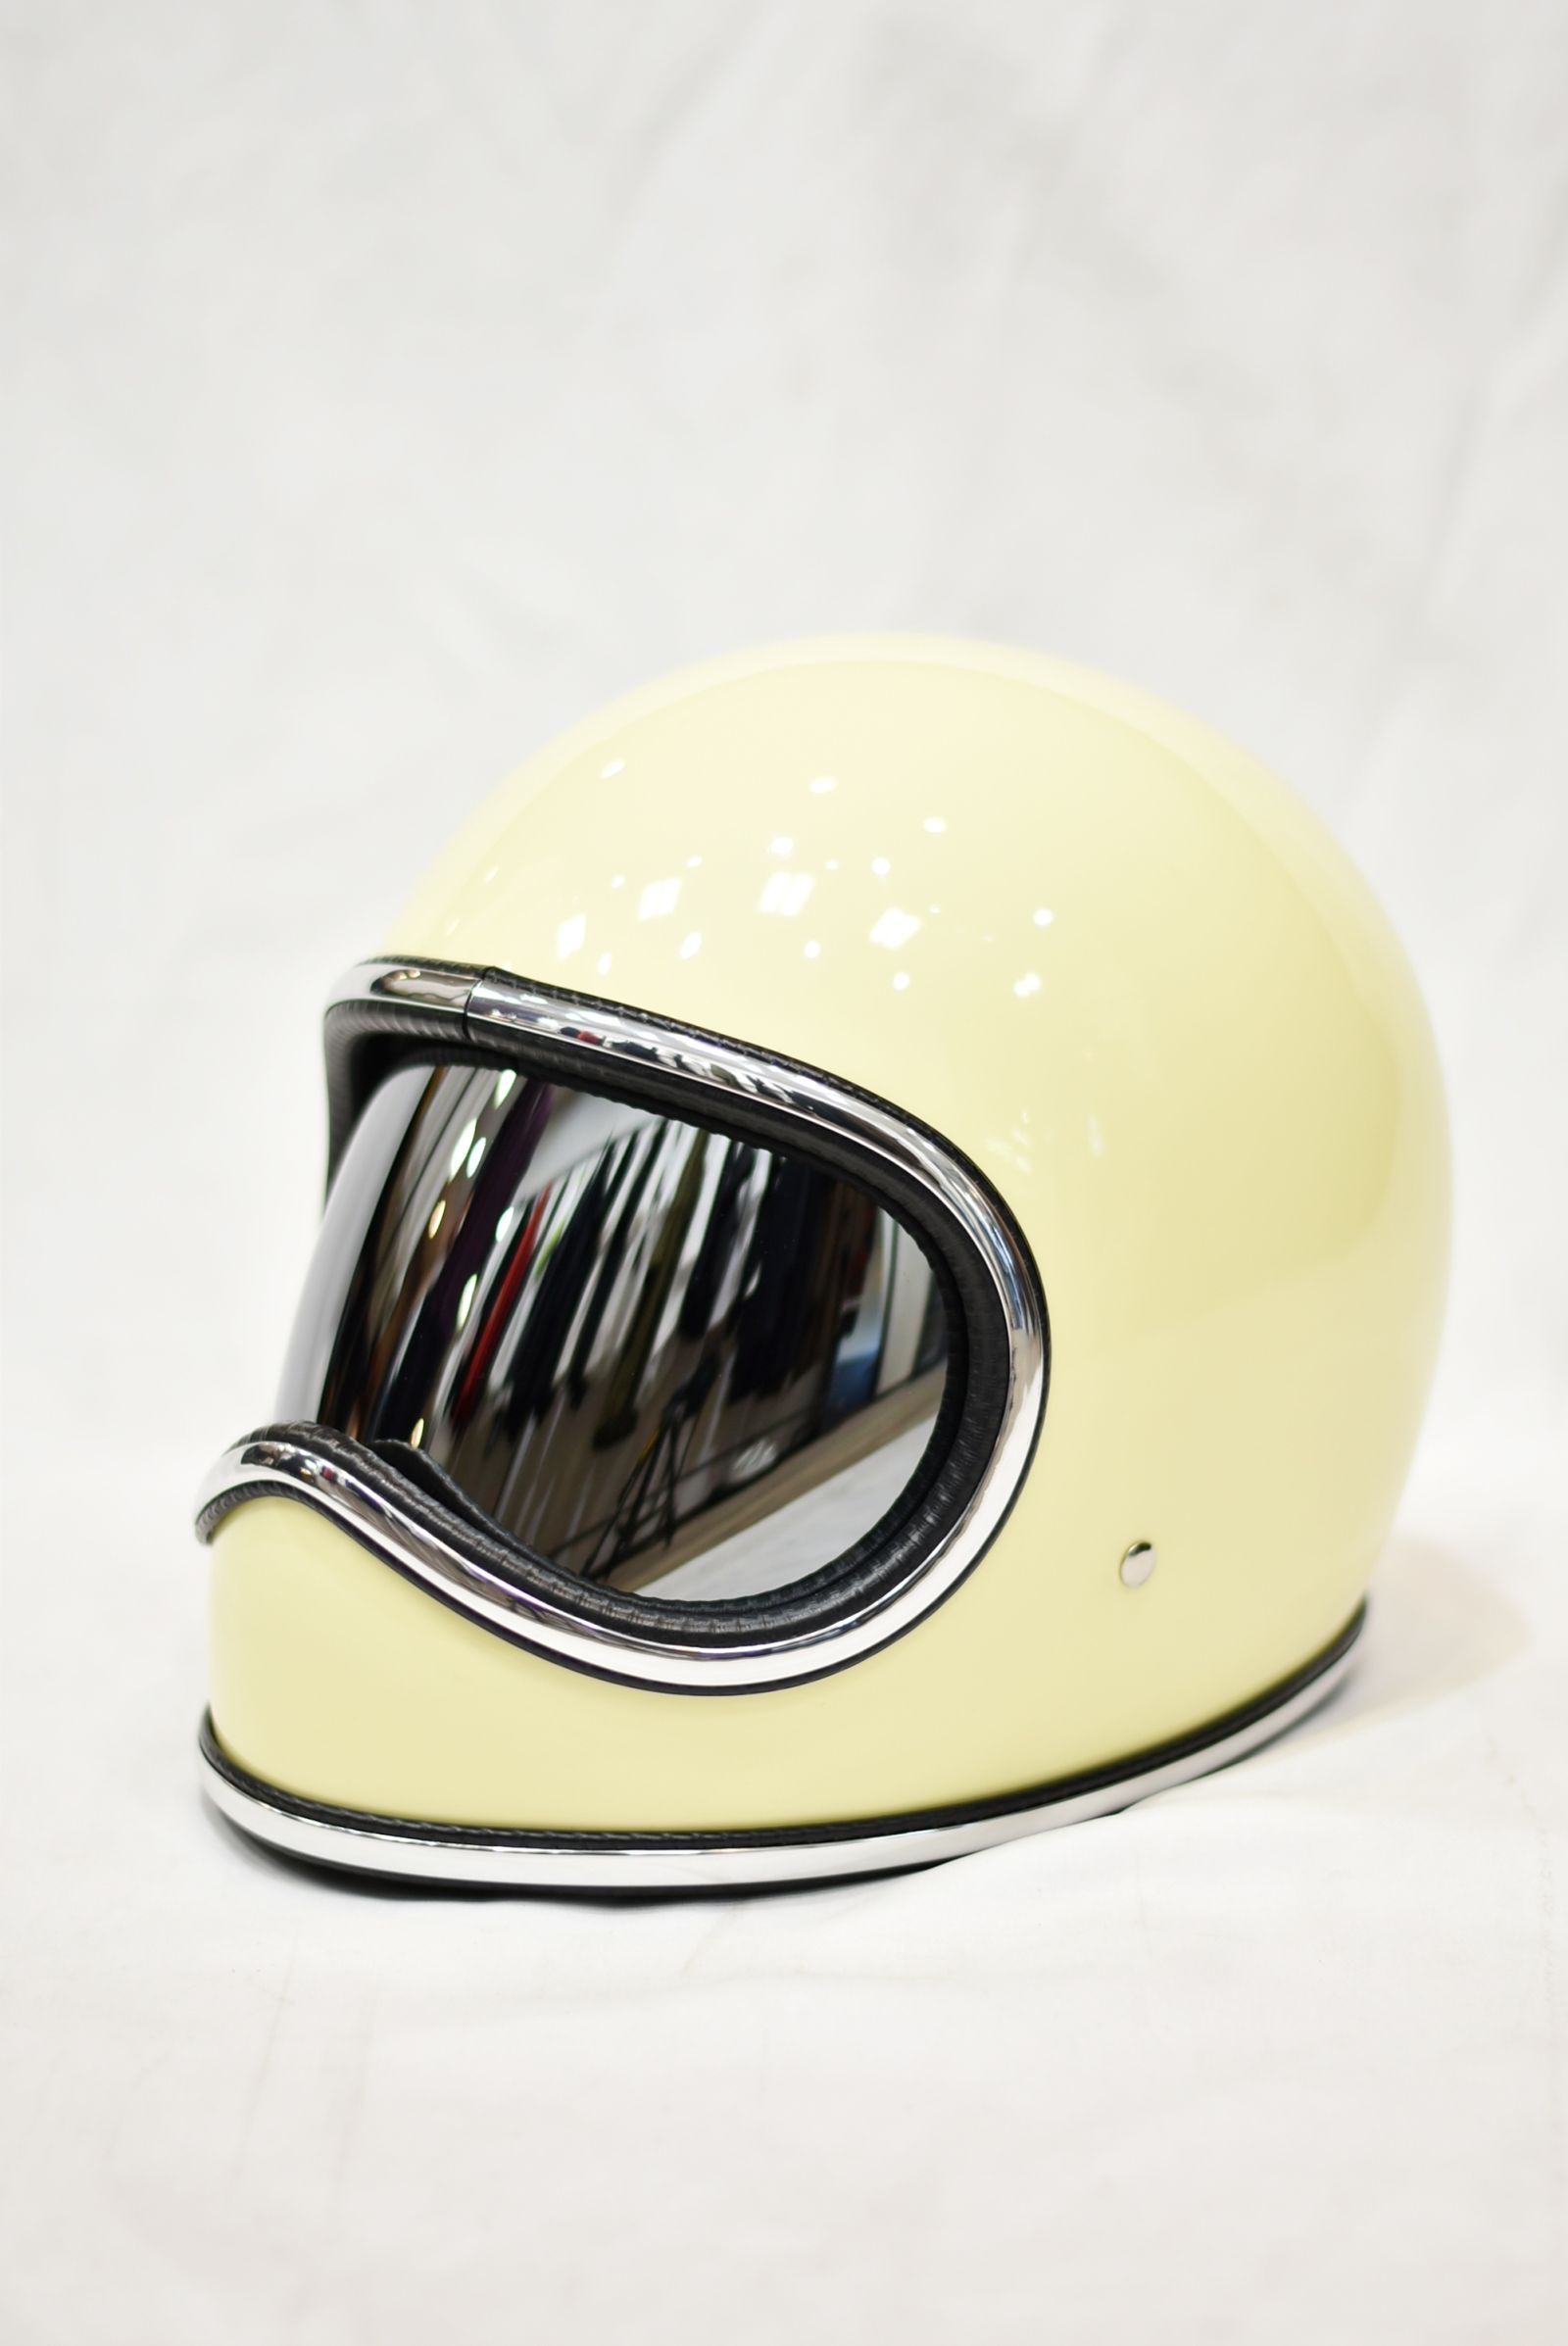 NoBudz - 予約商品 | SPACE HELMET ver.2 | スペースヘルメット | ブラック | 納期:未定(3ヶ月～6ヶ月程度) |  必ず商品説明をご覧ください。 | chord online store